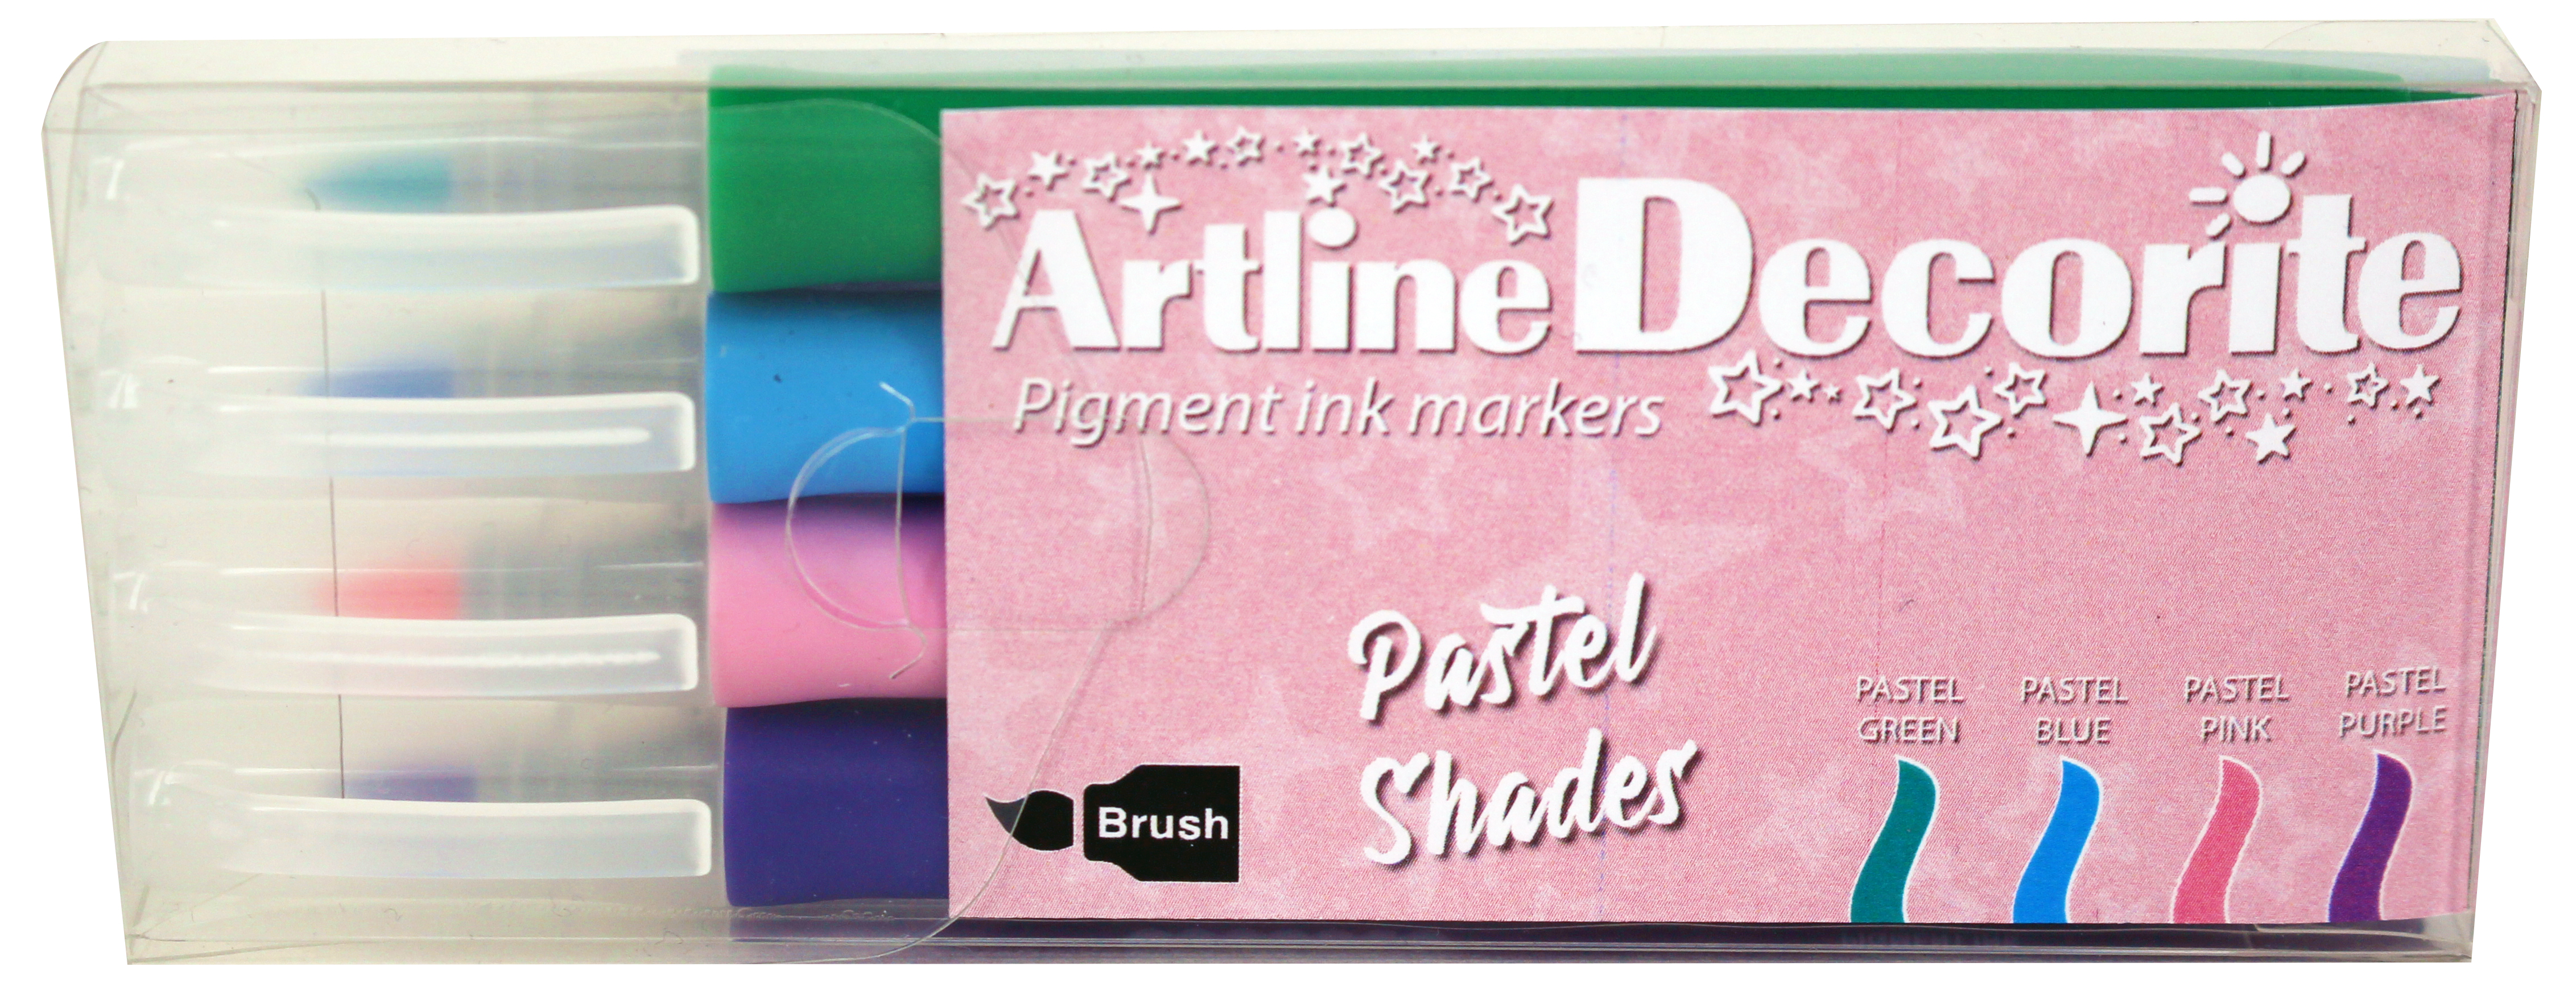 Artline Decorite Brush Pastell 4-pk